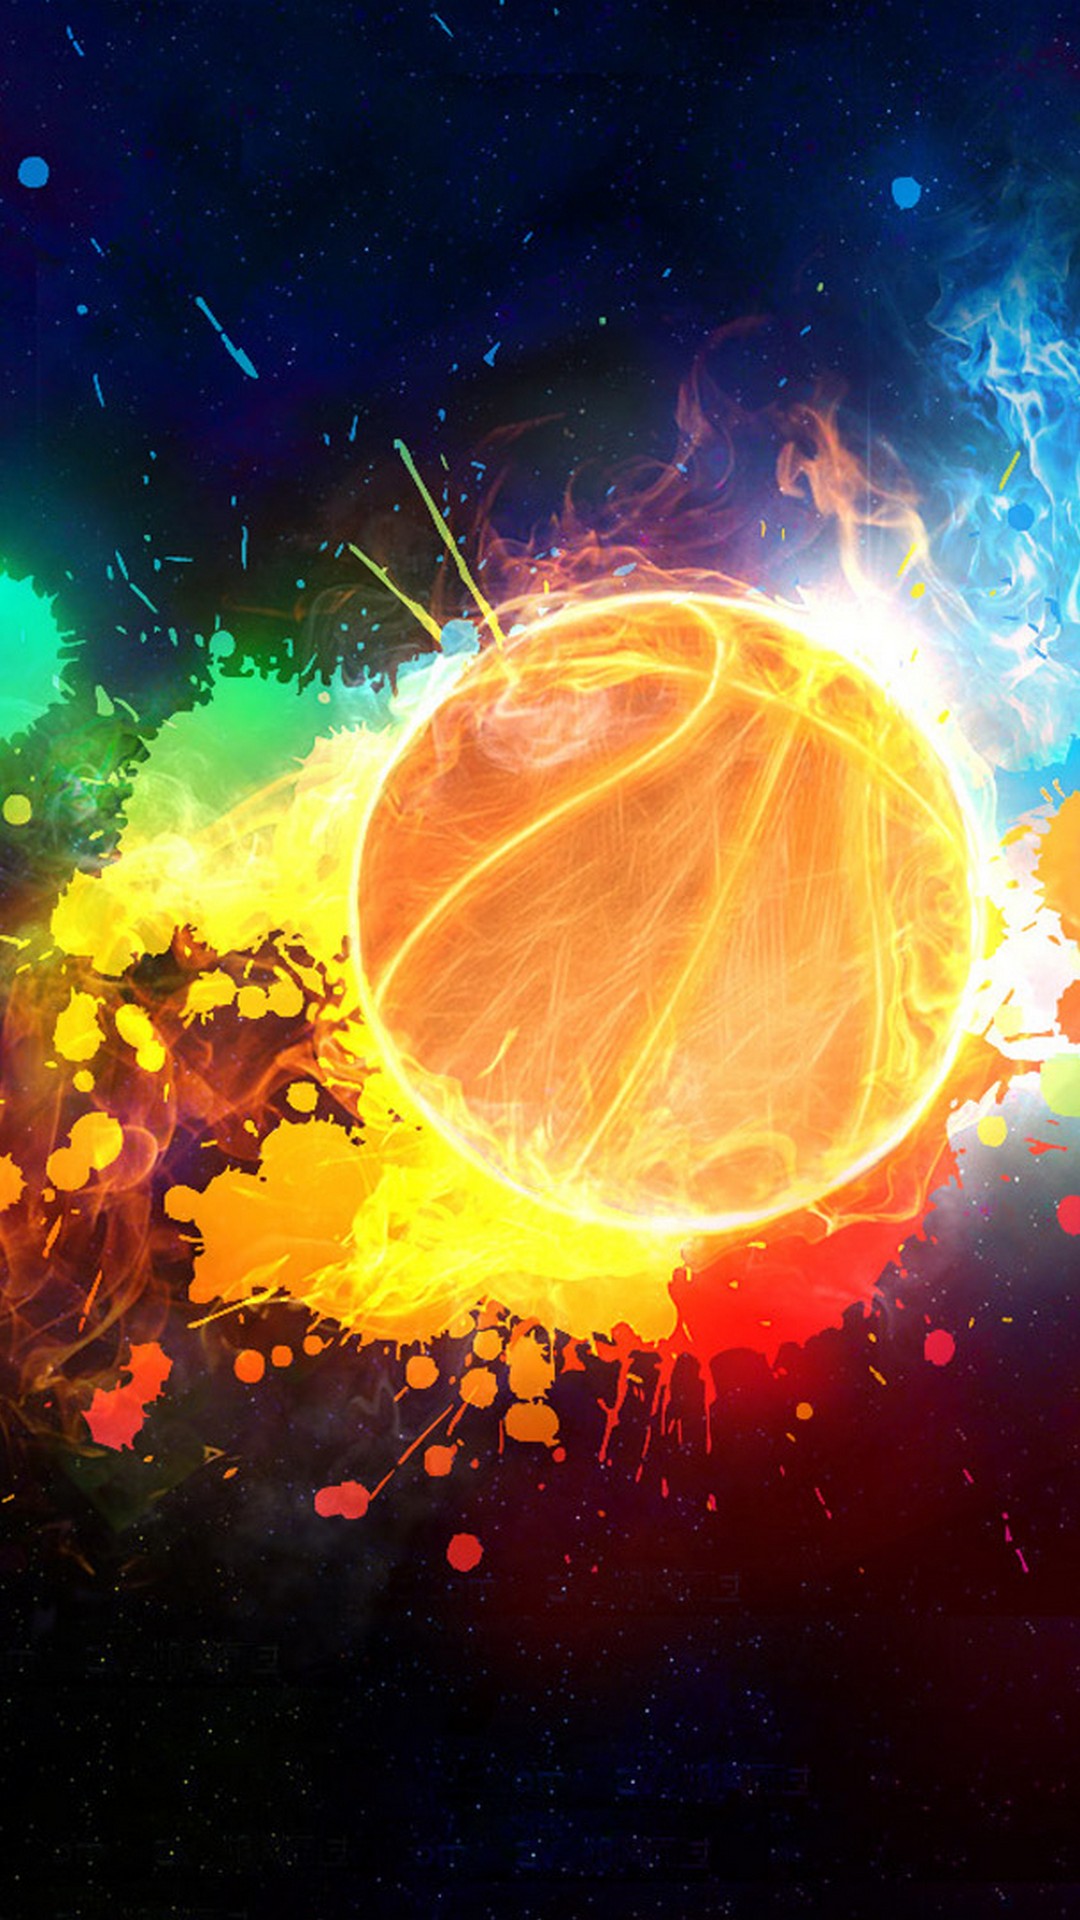 Basketball Games iPhone 6 Wallpaper | 2021 Basketball ...